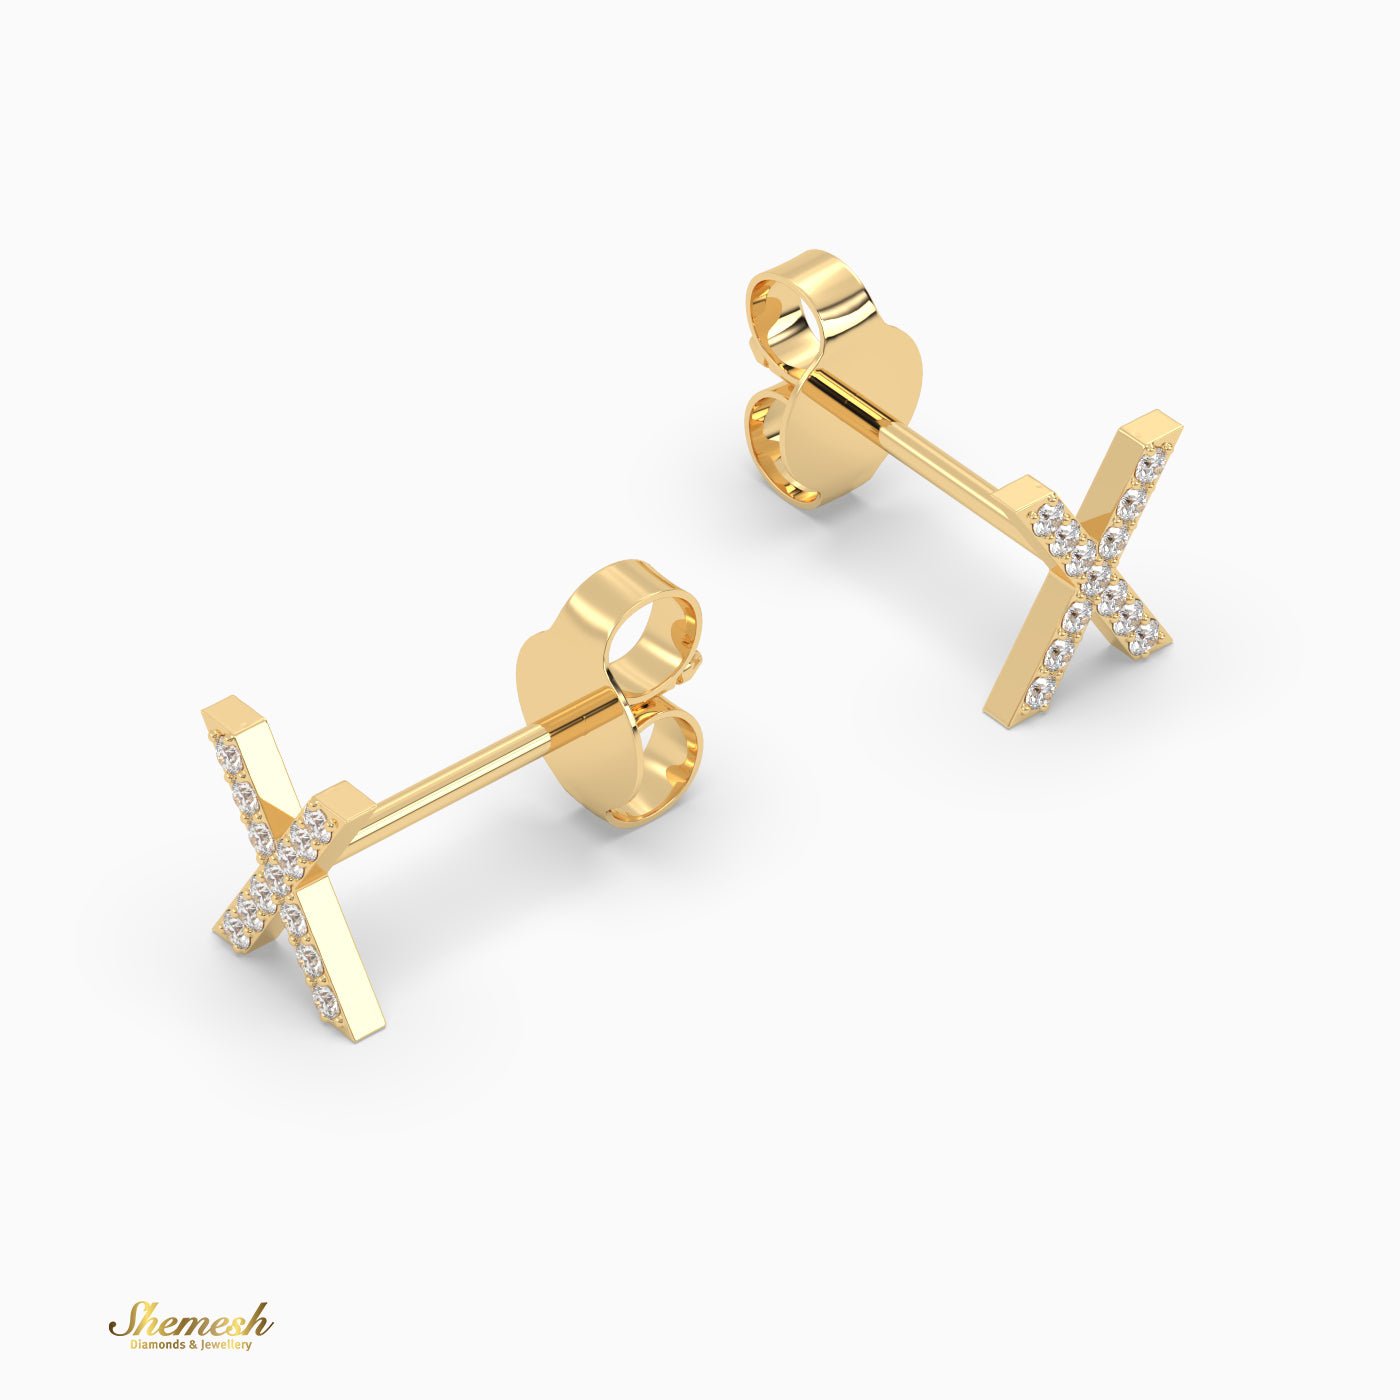 18K Gold "X" Initial Stud Earrings - shemesh_diamonds